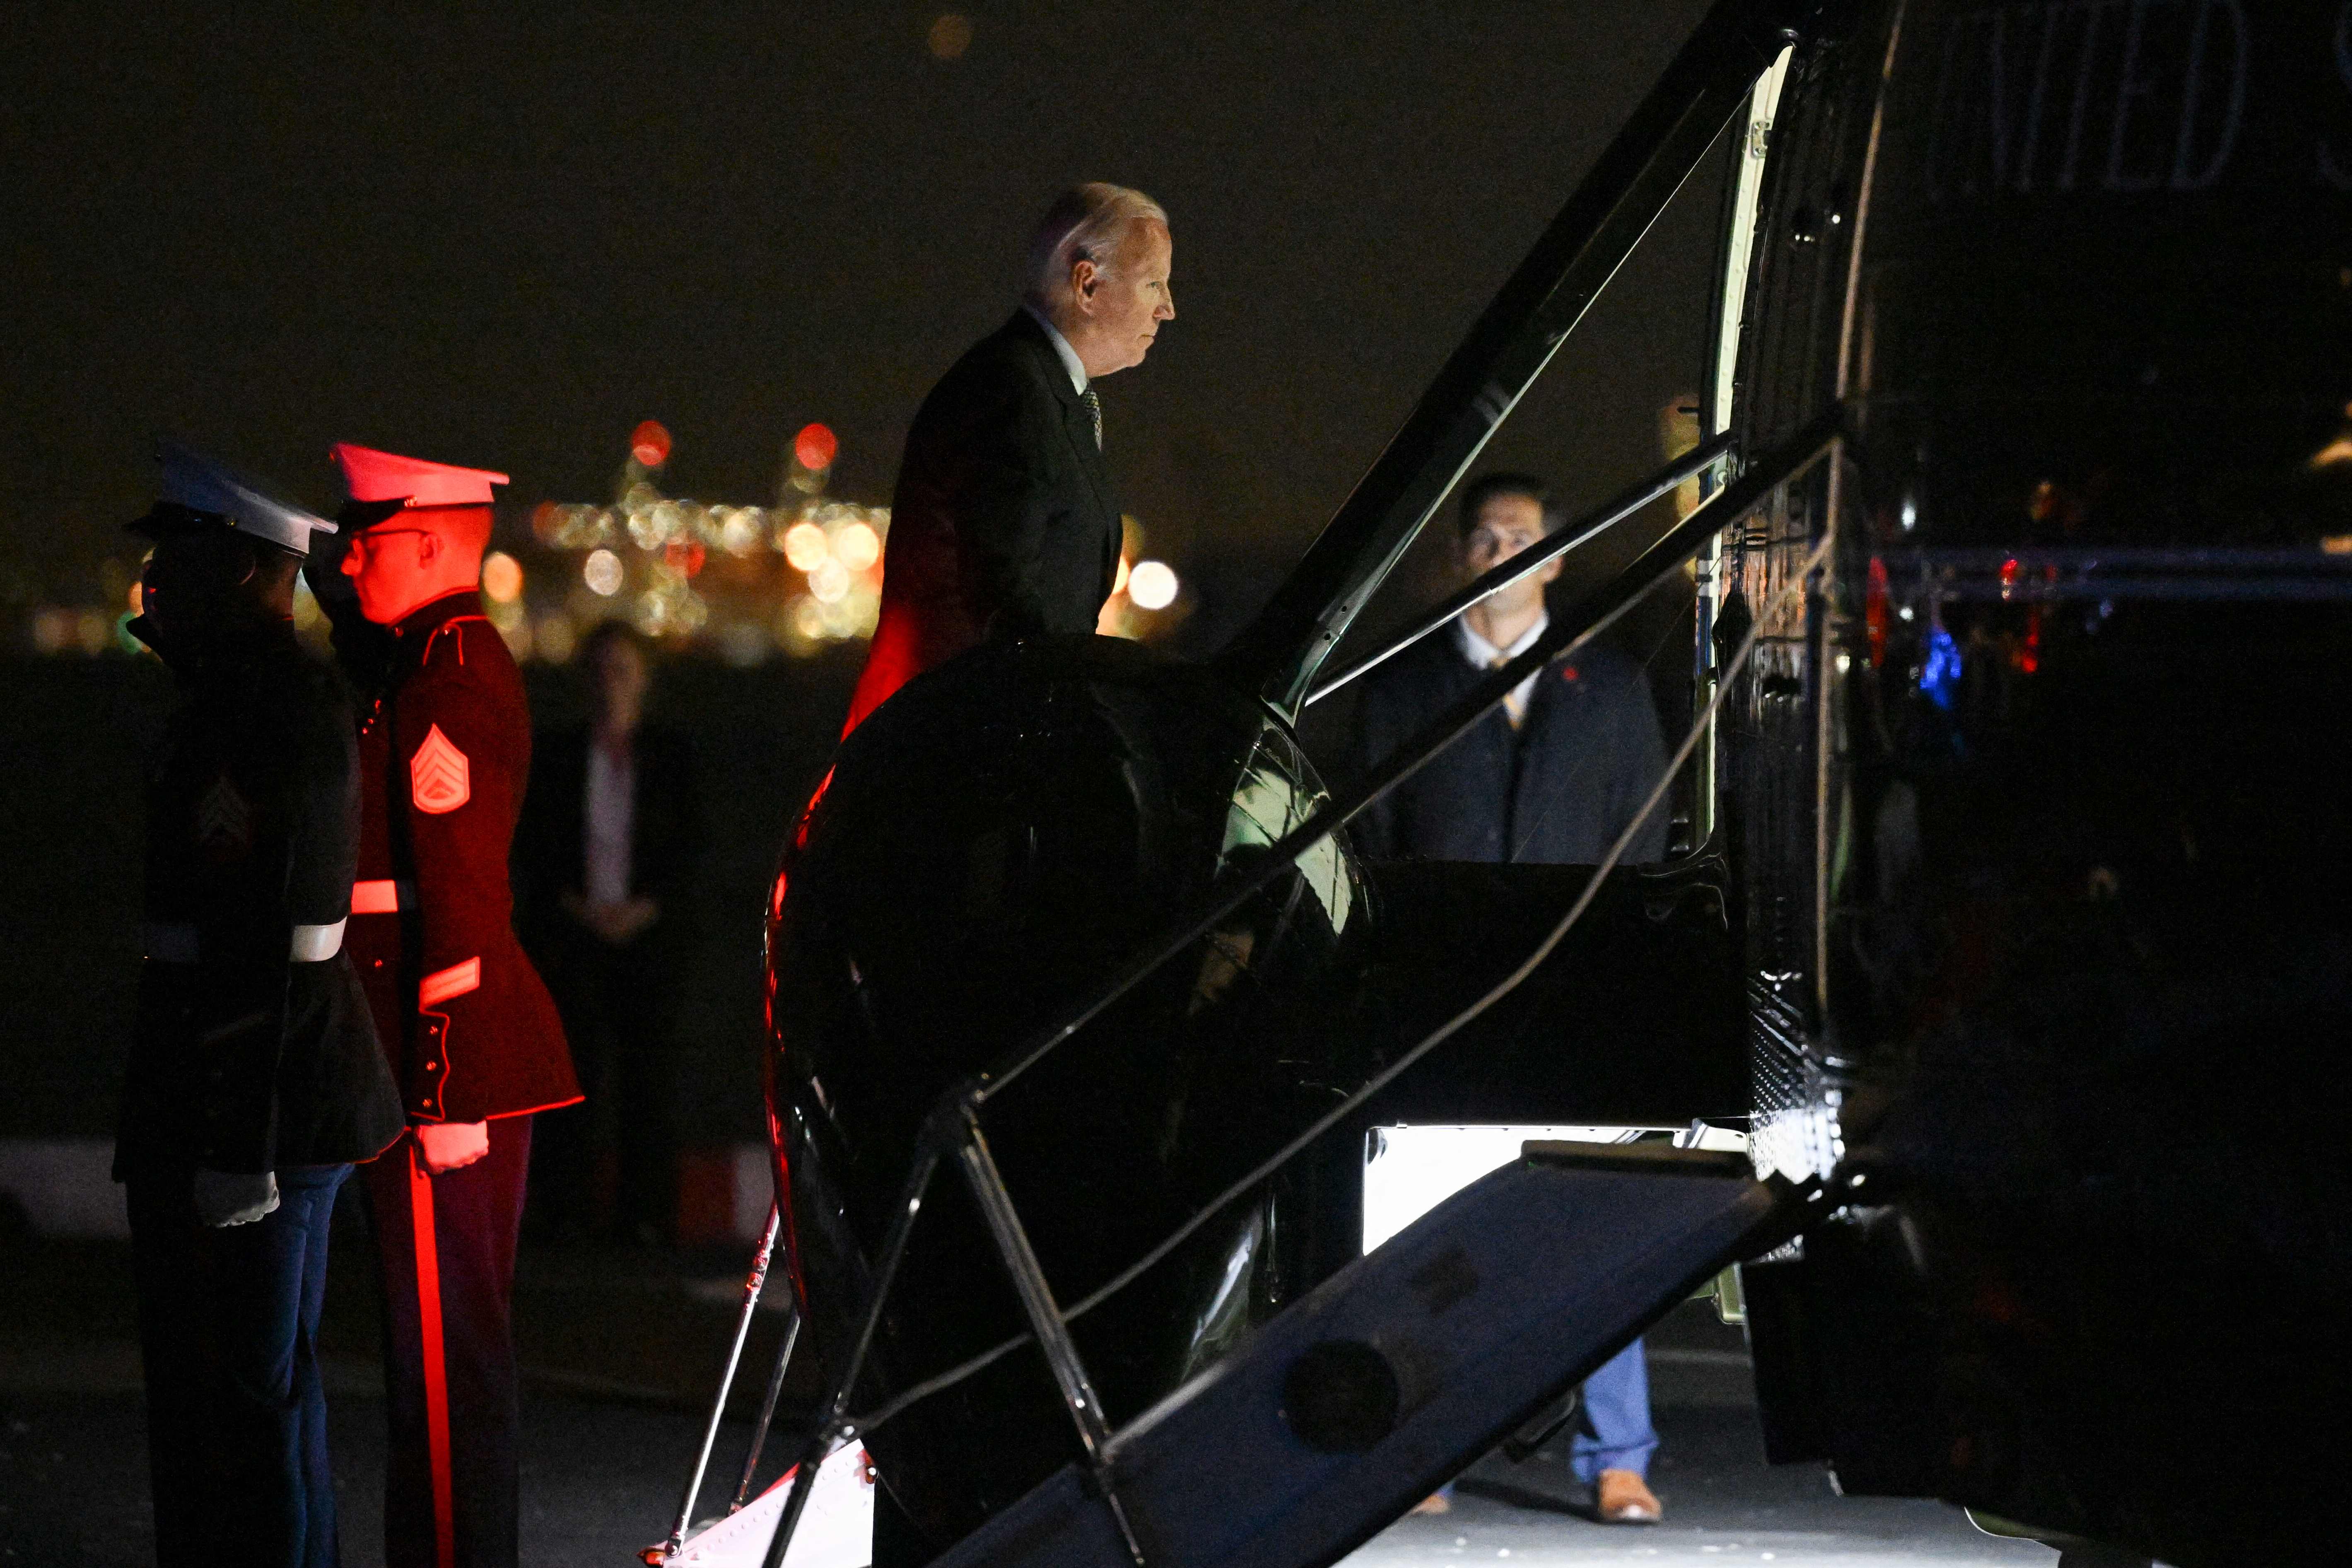 President Joe Biden boards Marine One before departing from the Wall Street landing zone in New York on October 6, 2022